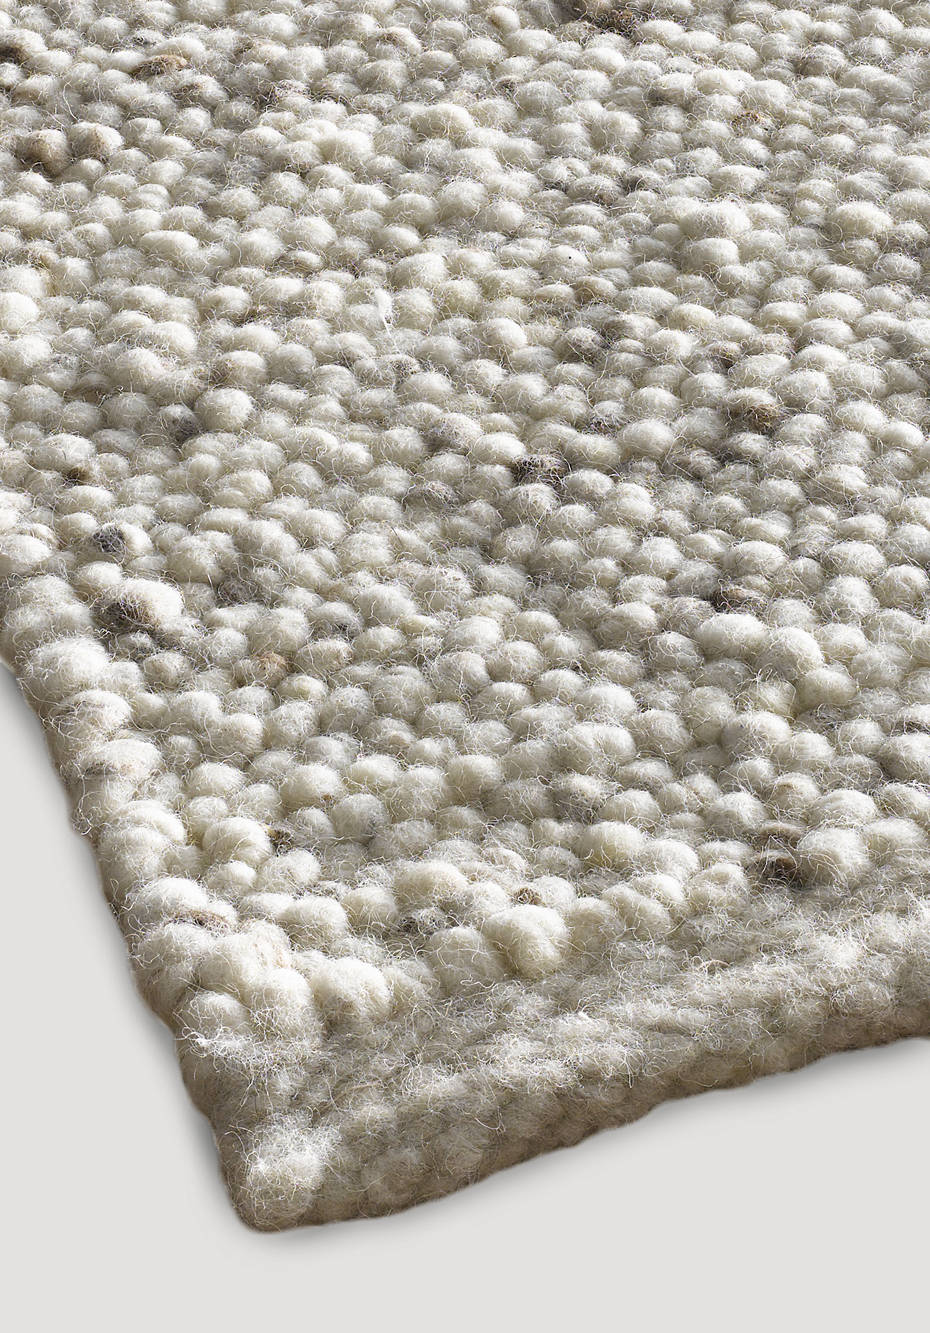 Rhön sheep rug made of pure new wool